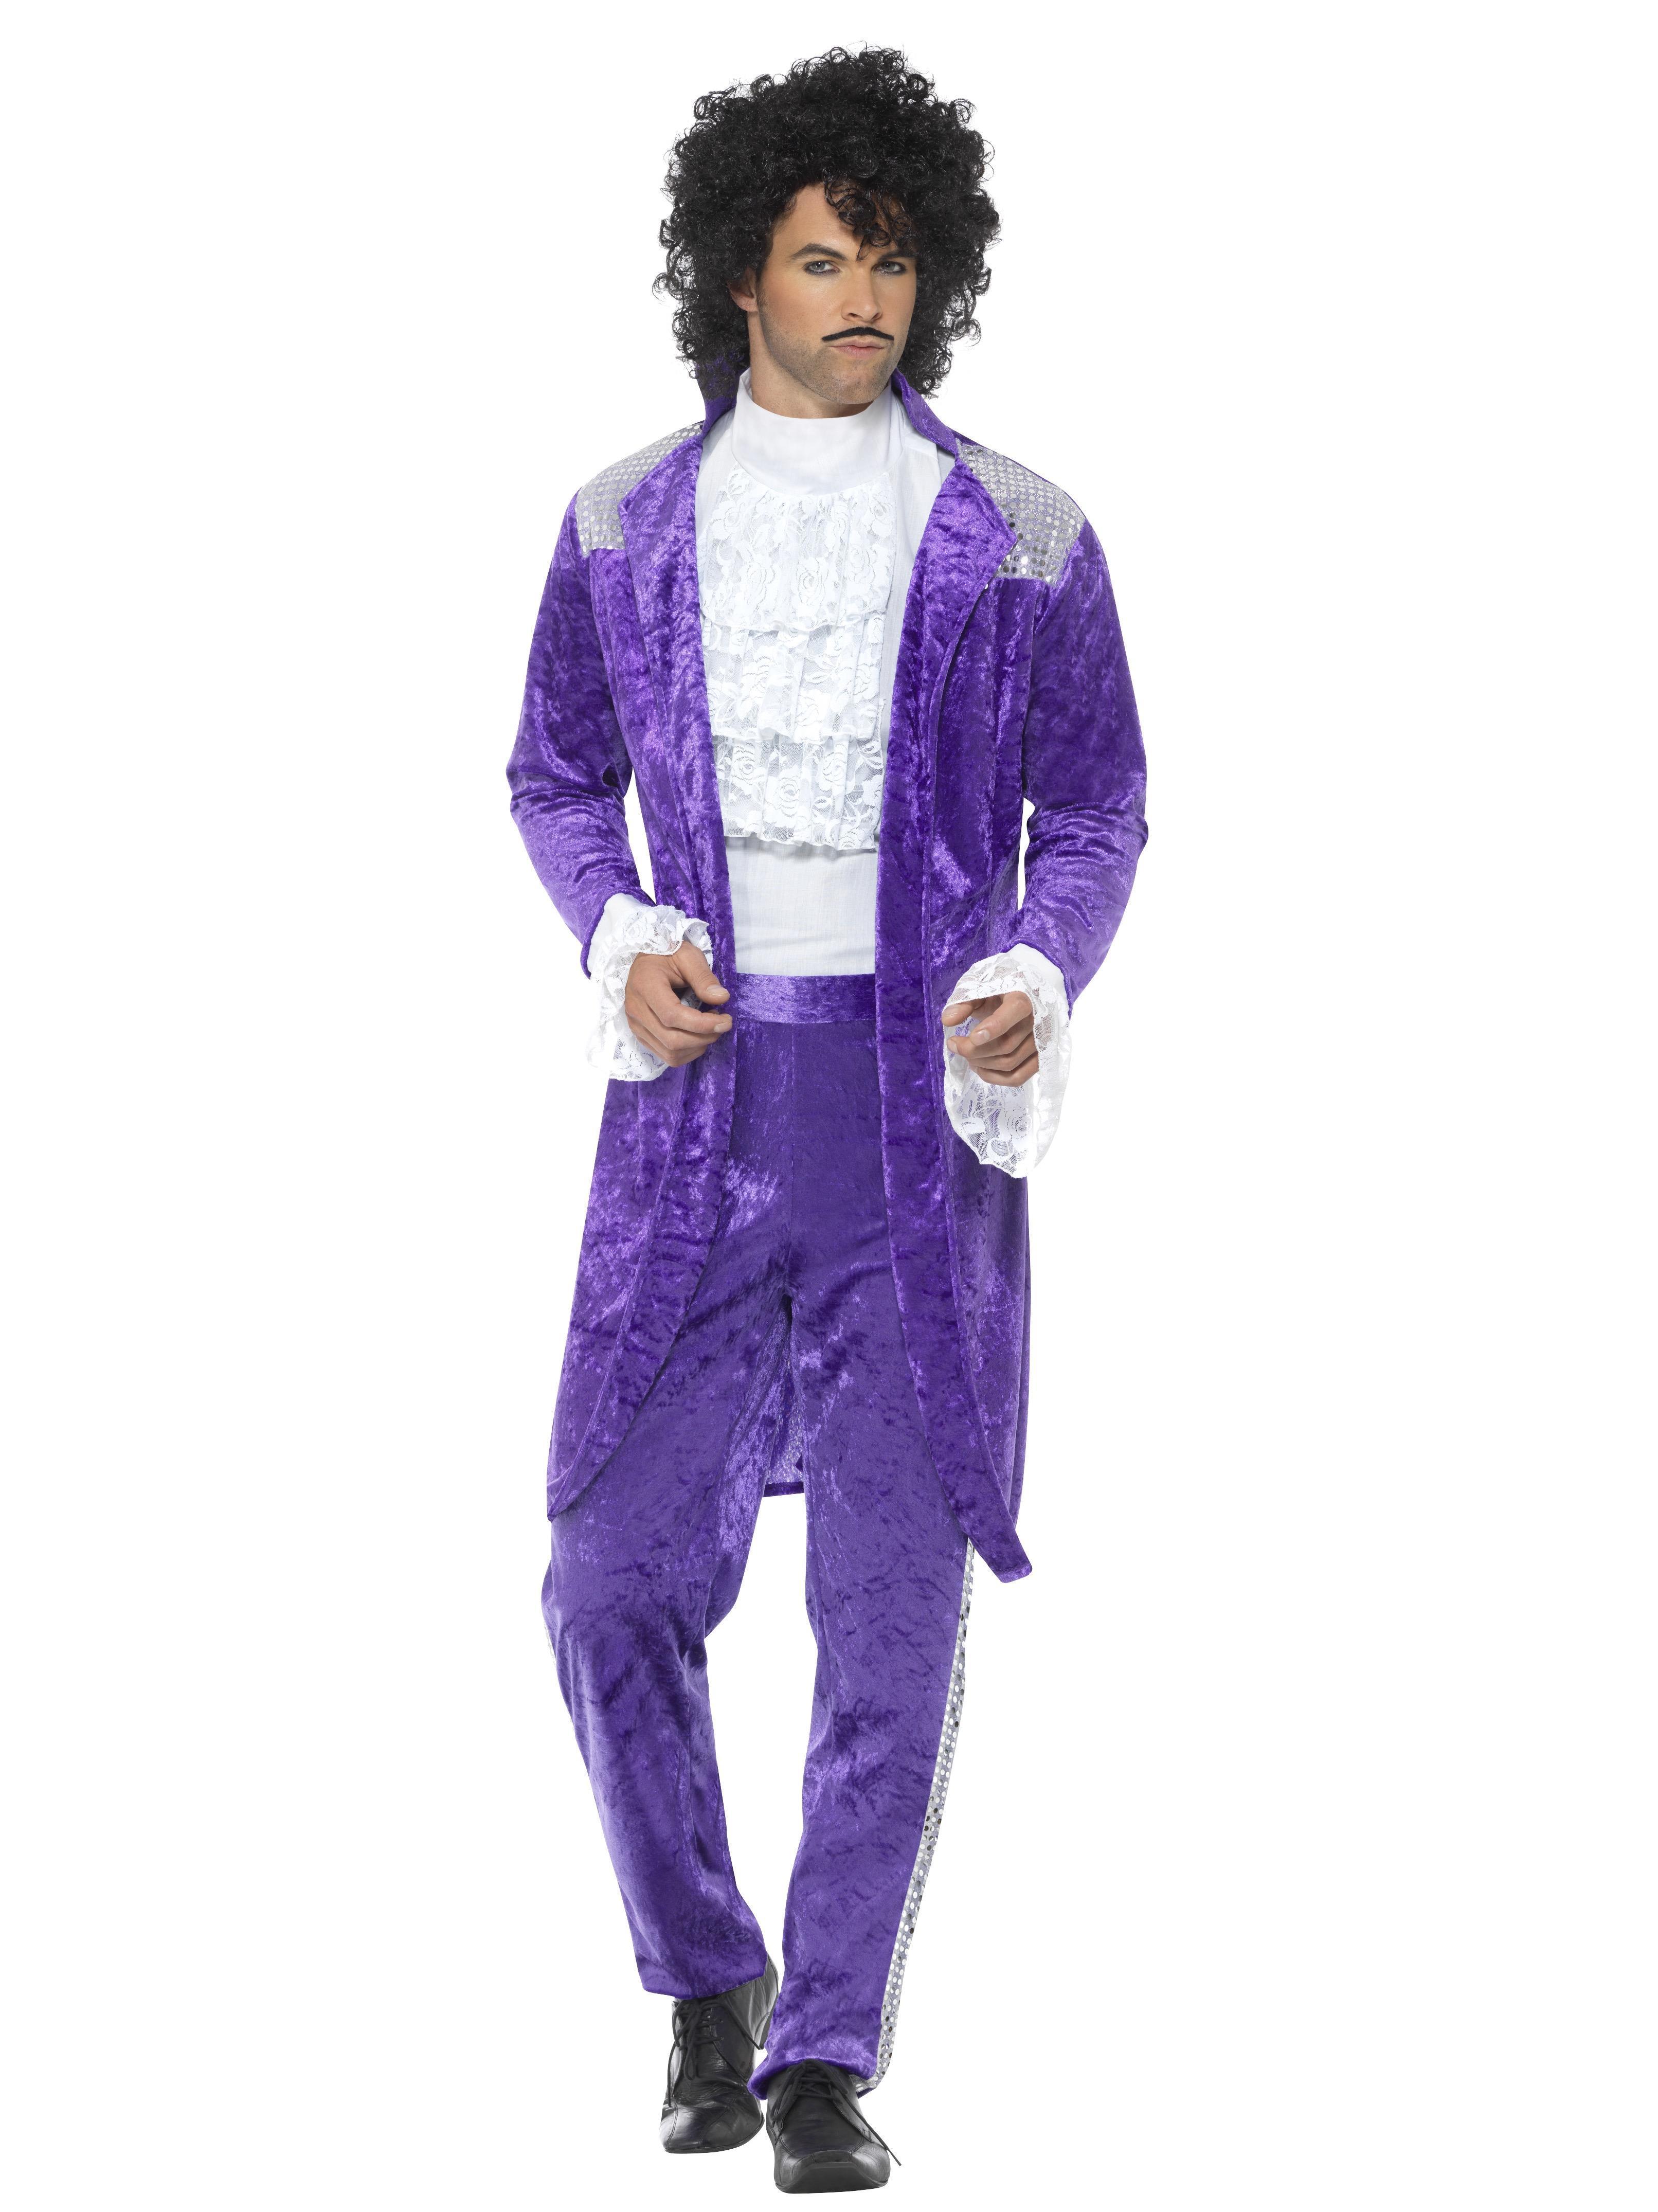 80s Purple Musician Costume